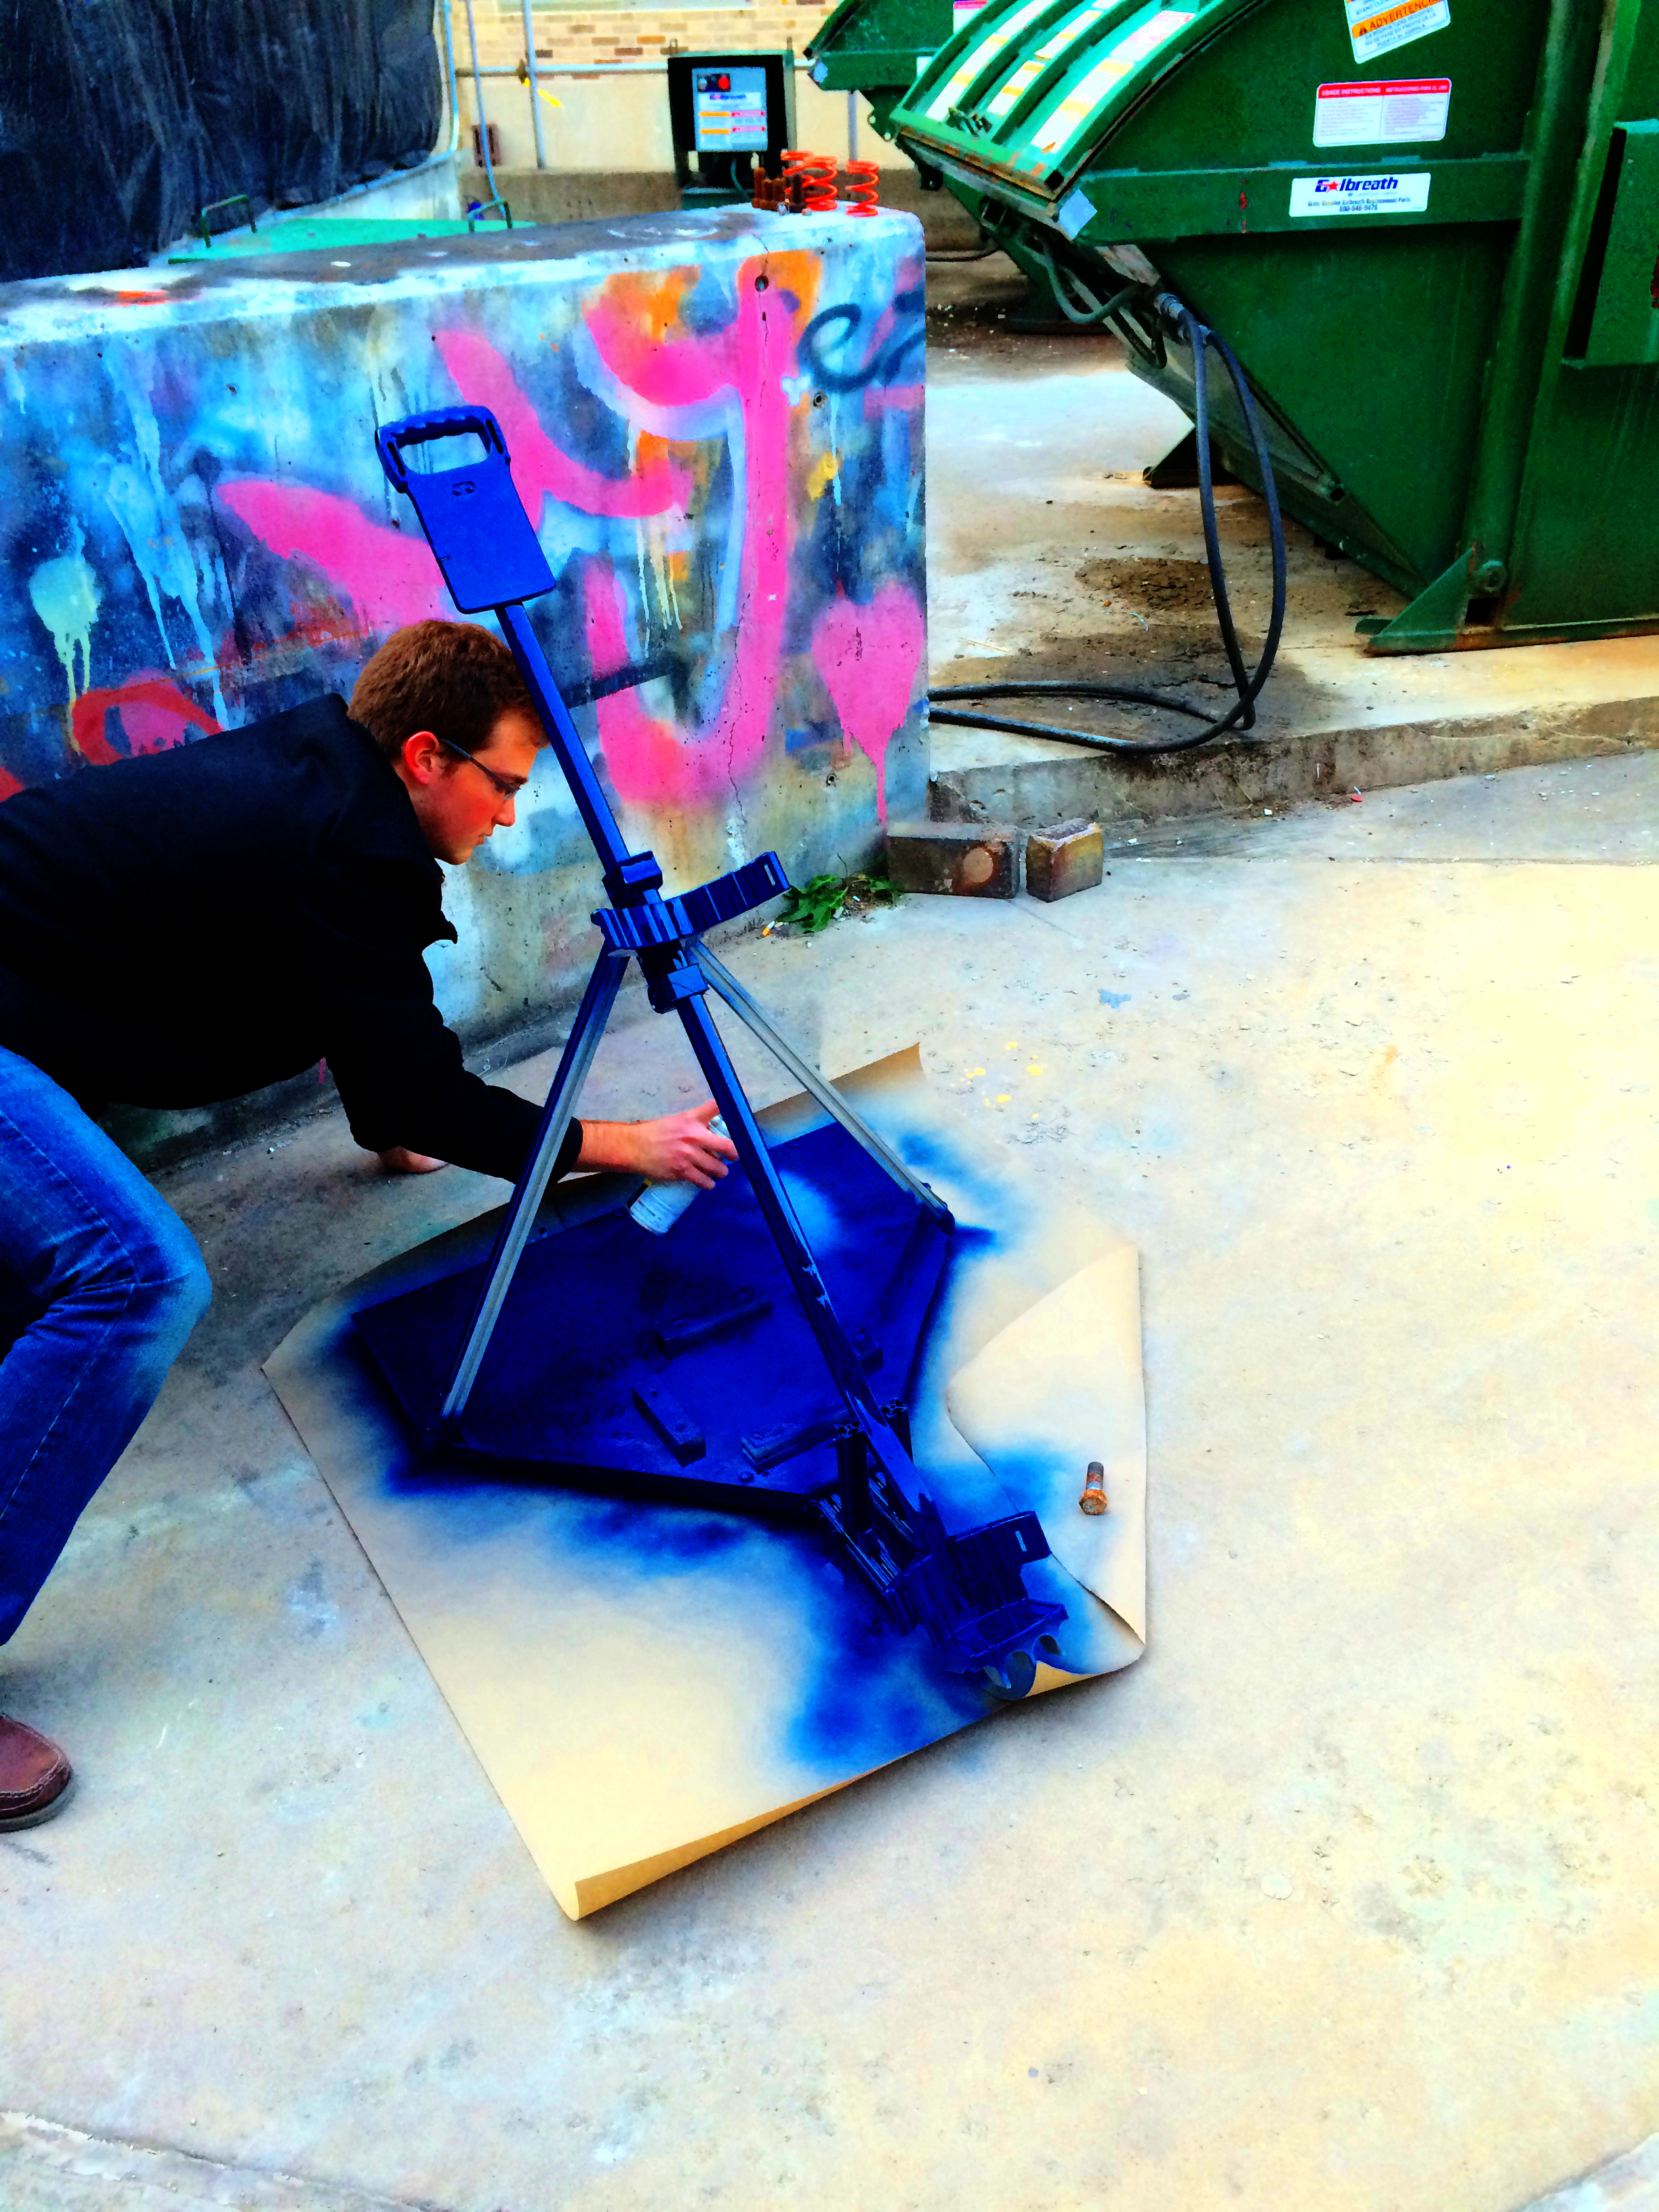 Matt painting the cart